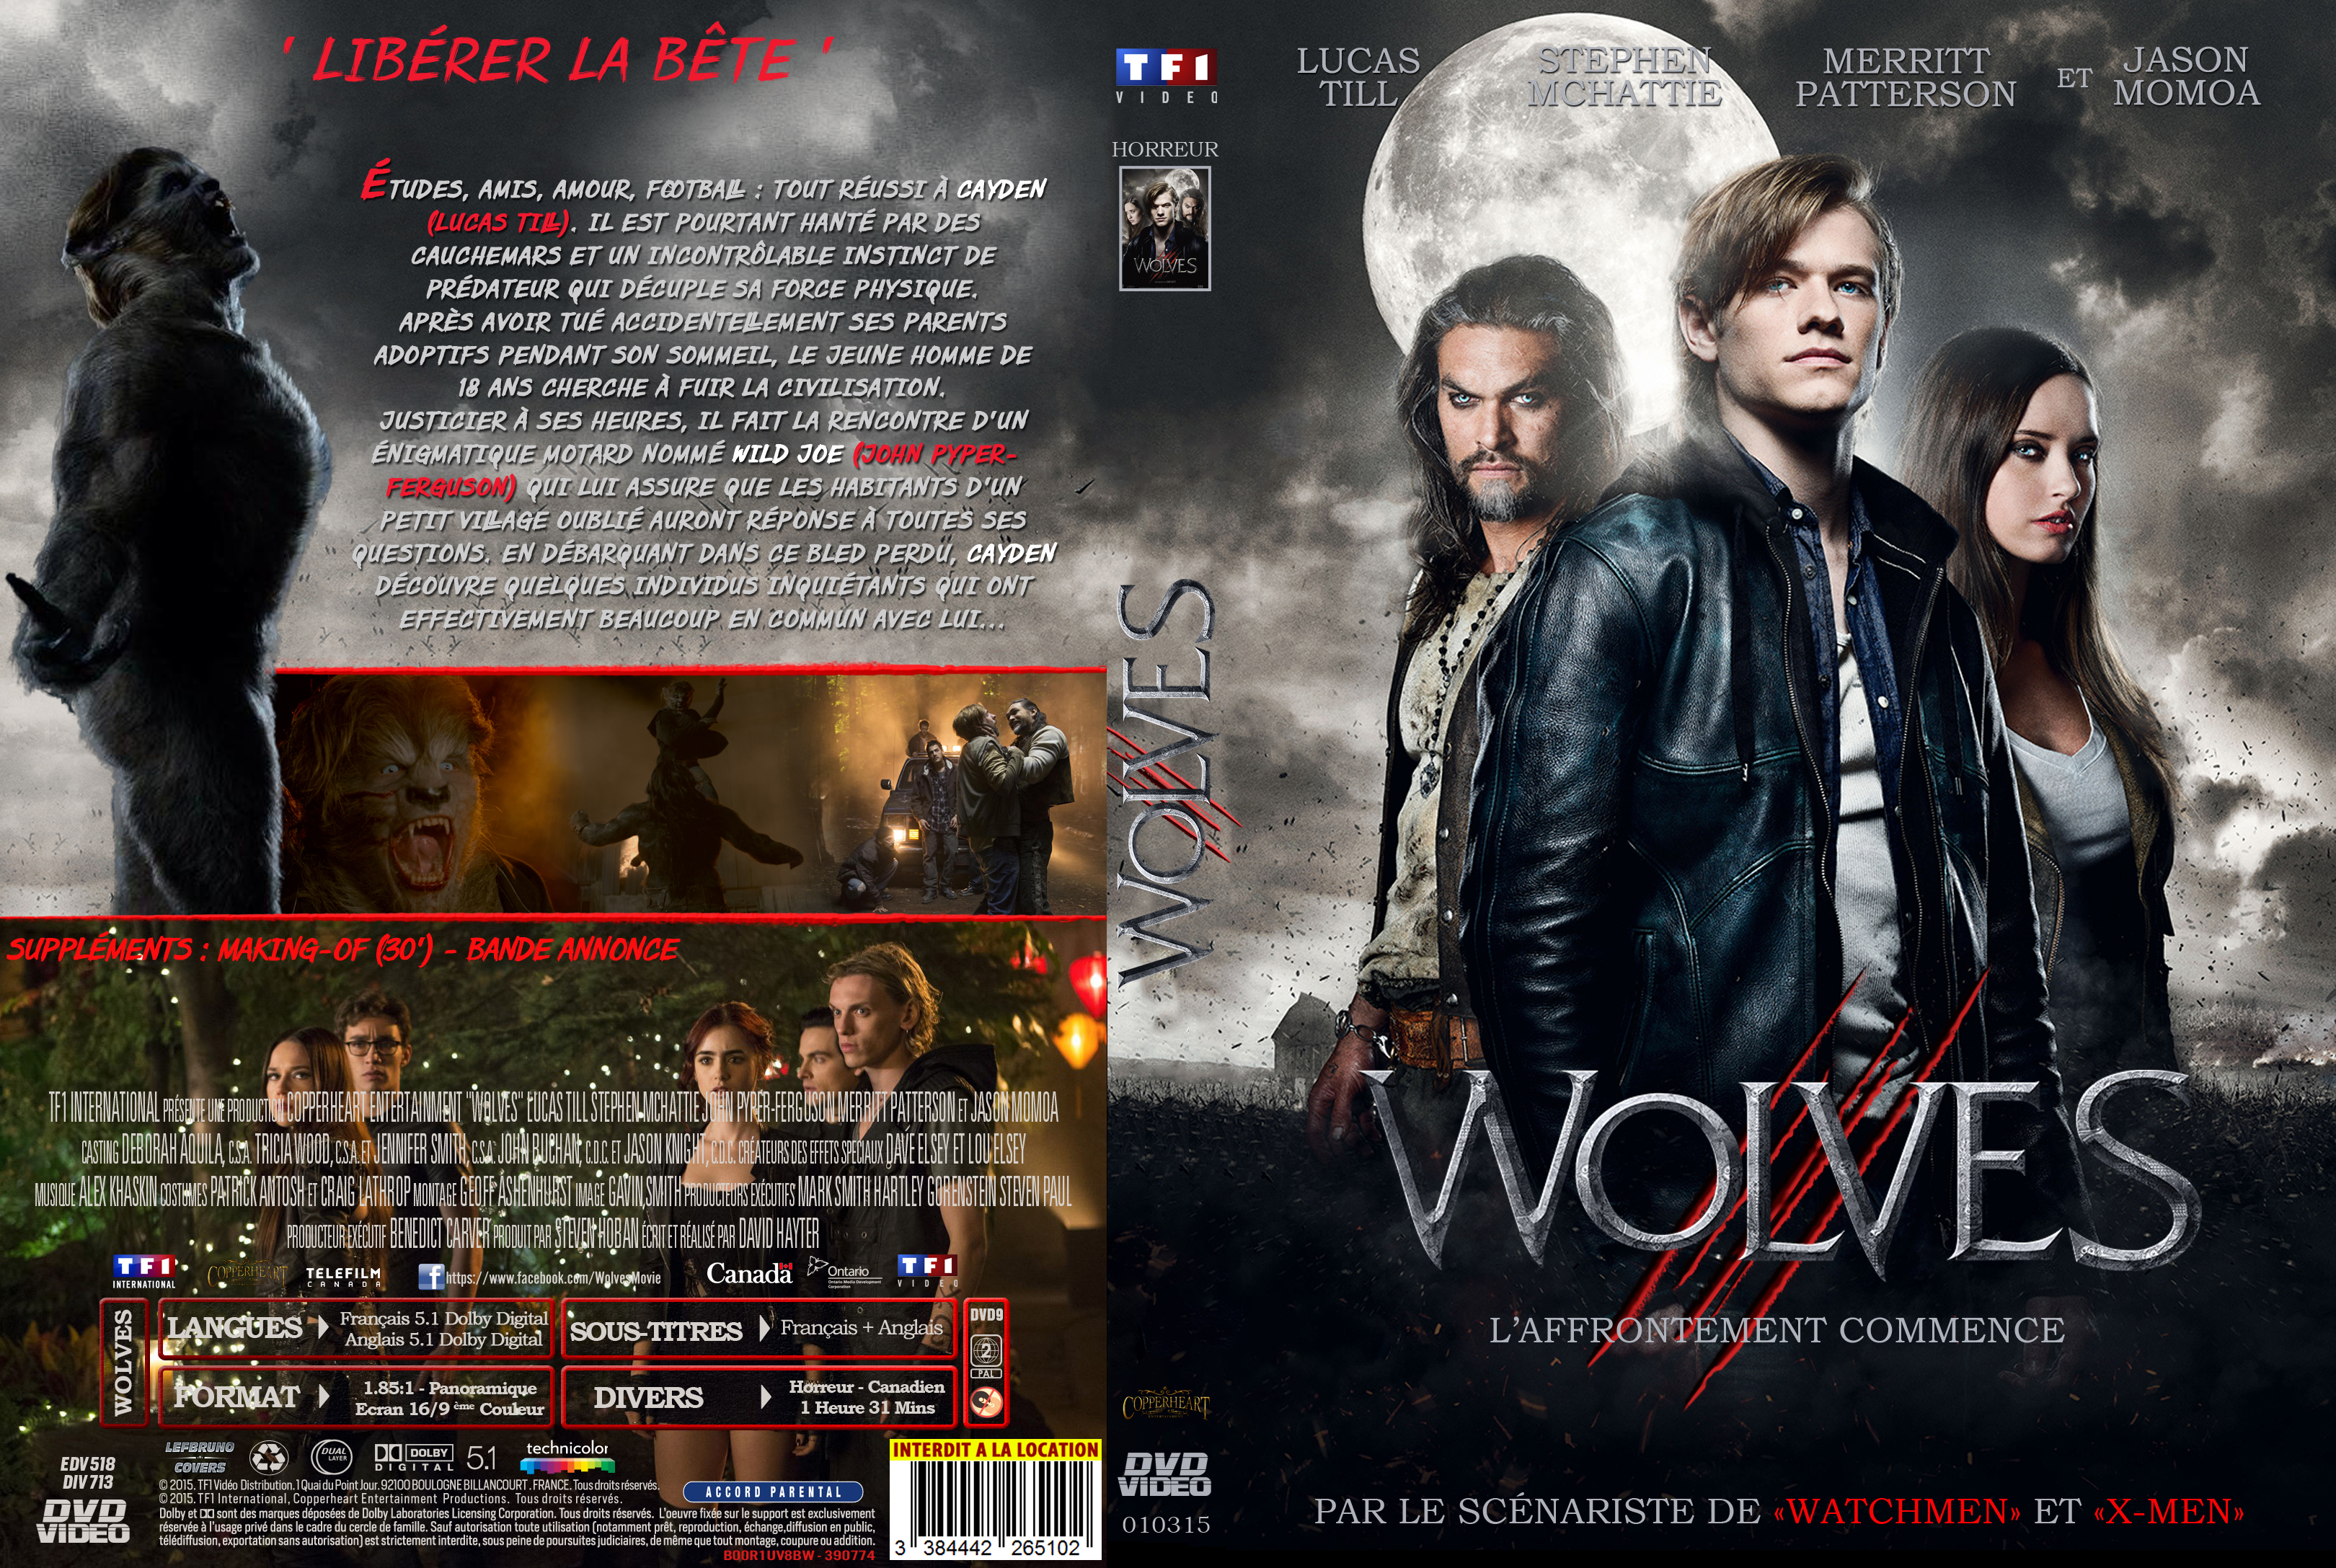 Jaquette DVD Wolves custom